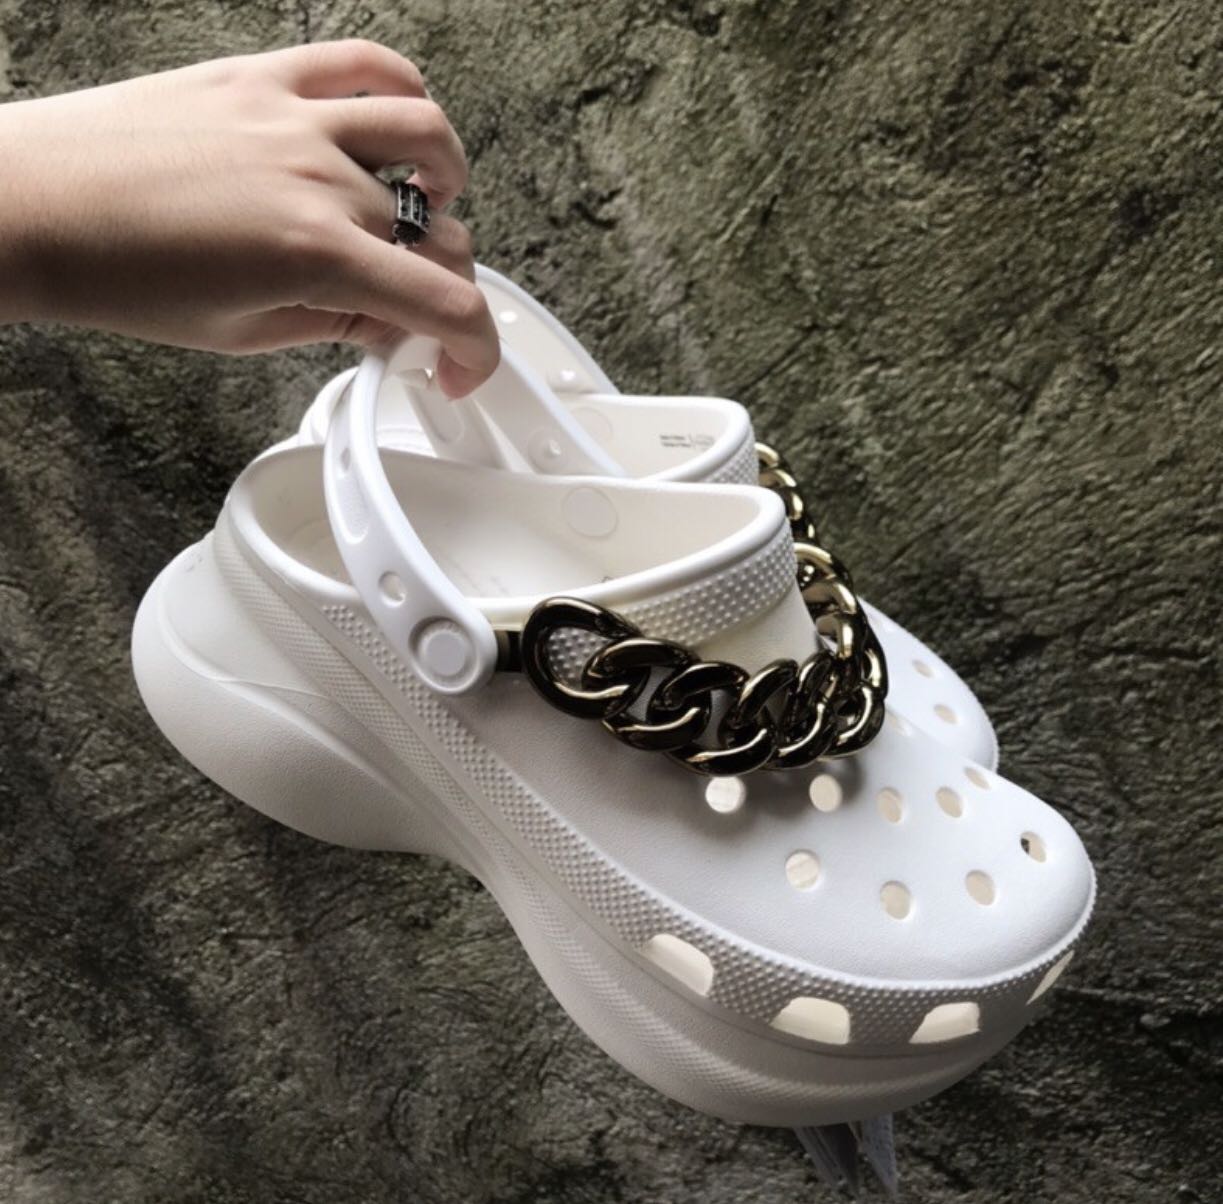 Brand new Crocs white with chain platform clogs size 7, Women's Fashion ...